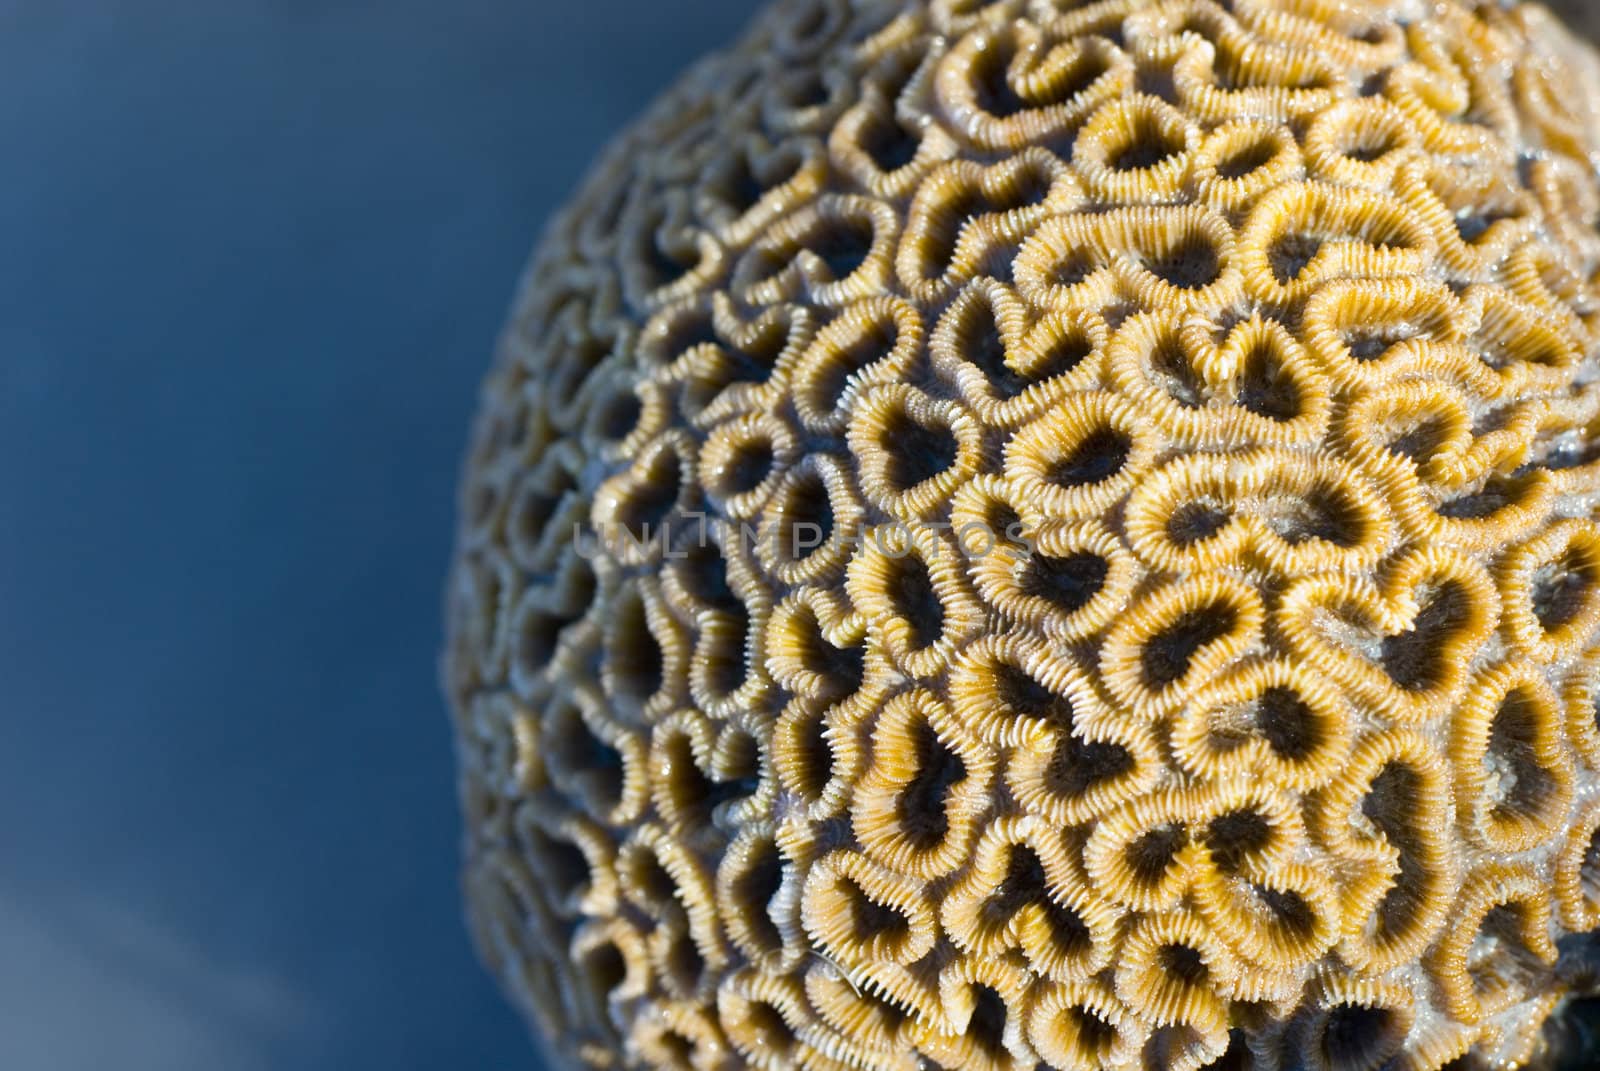 Star coral Dichocoenia by stockarch